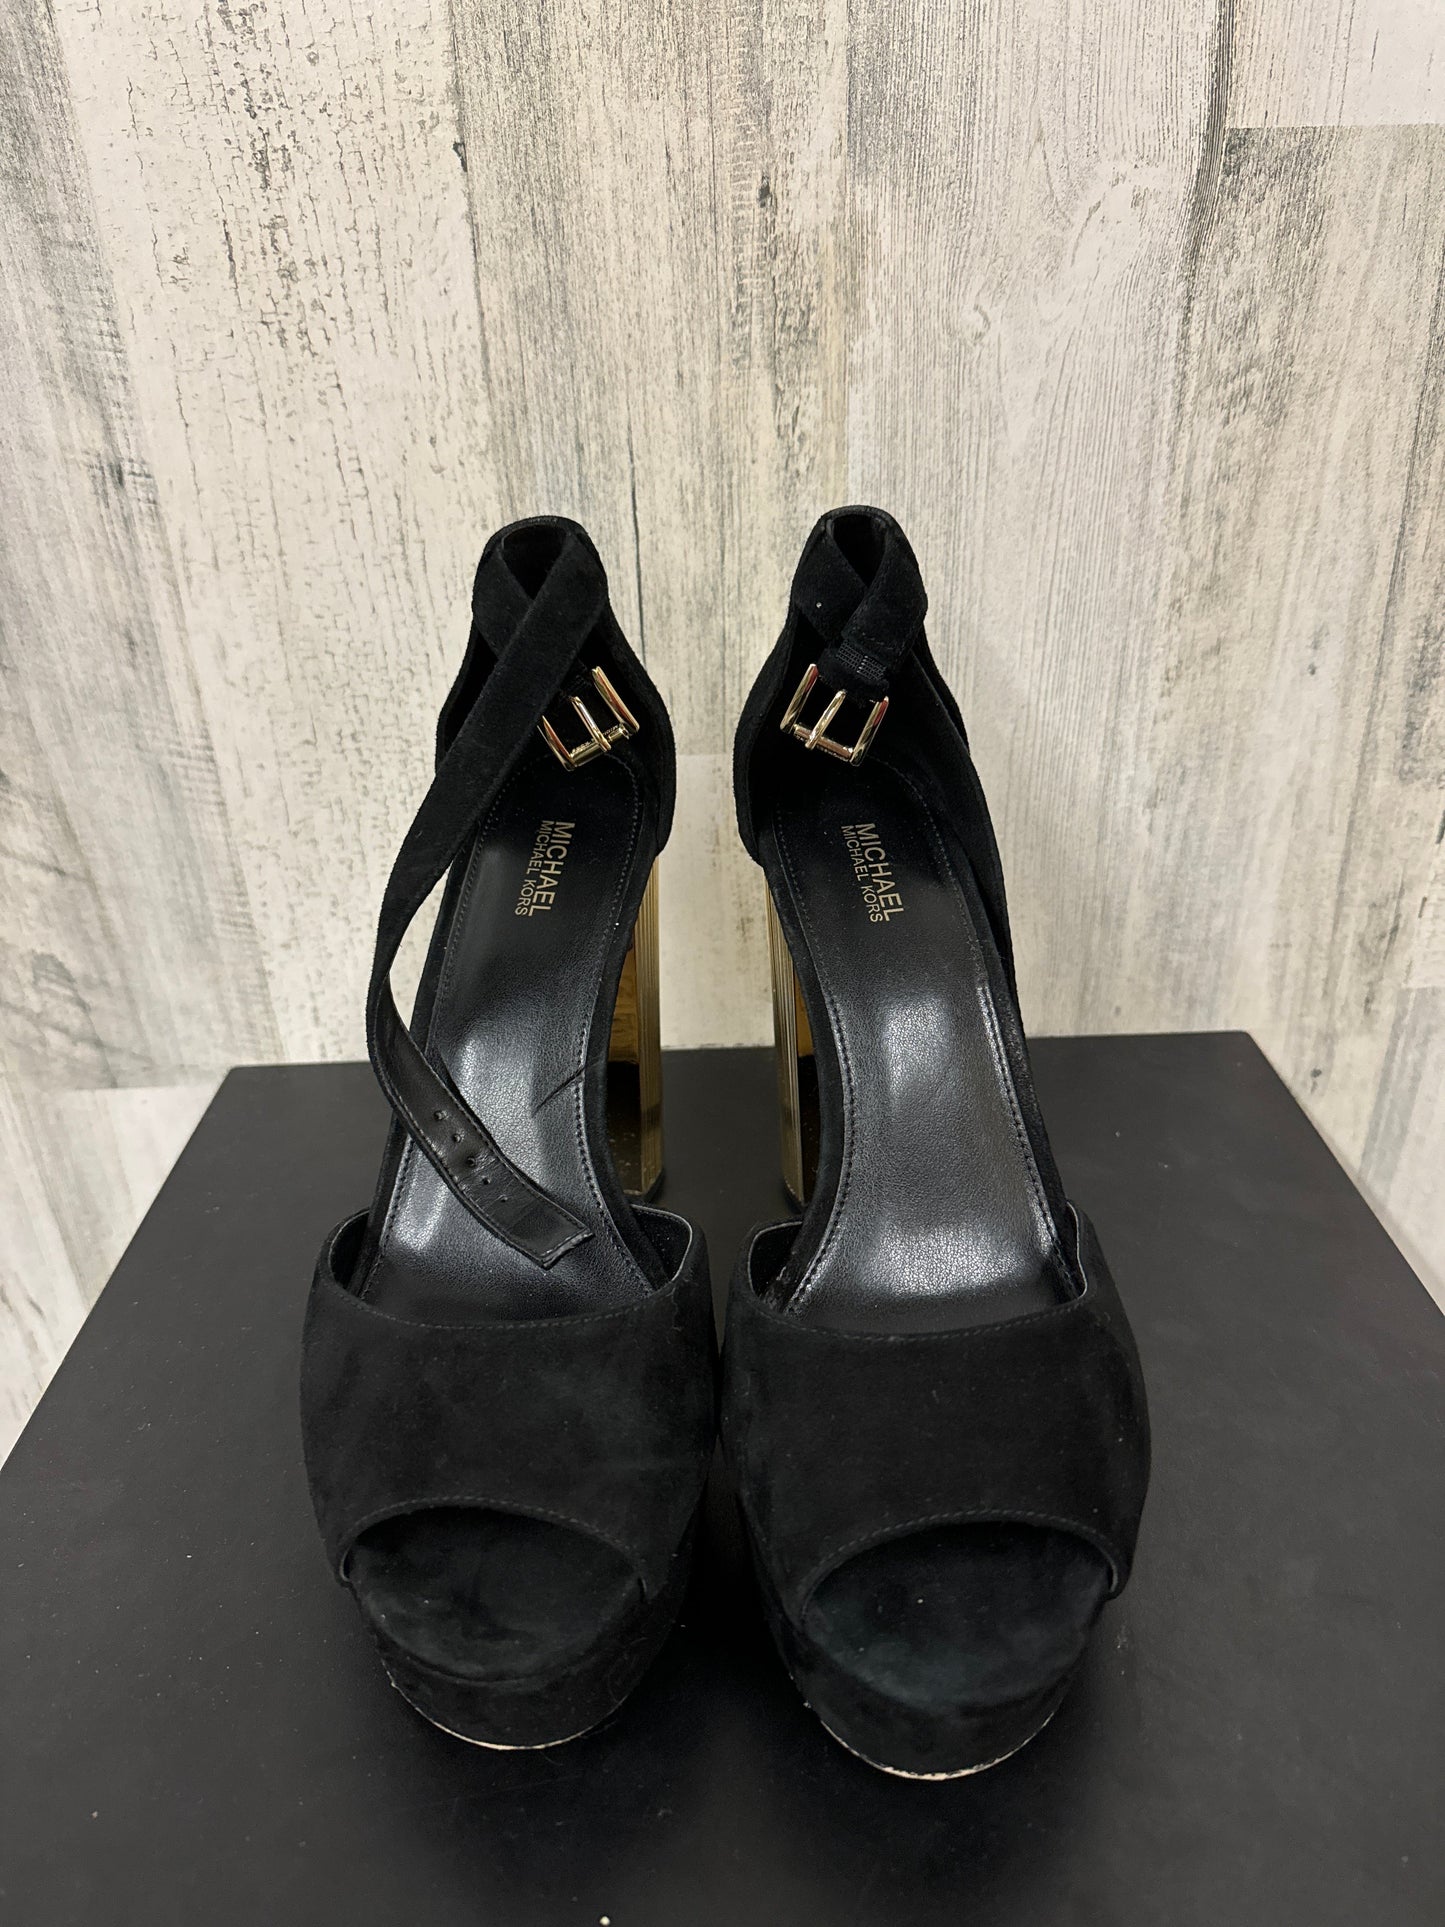 Black Shoes Heels Block Michael Kors, Size 10